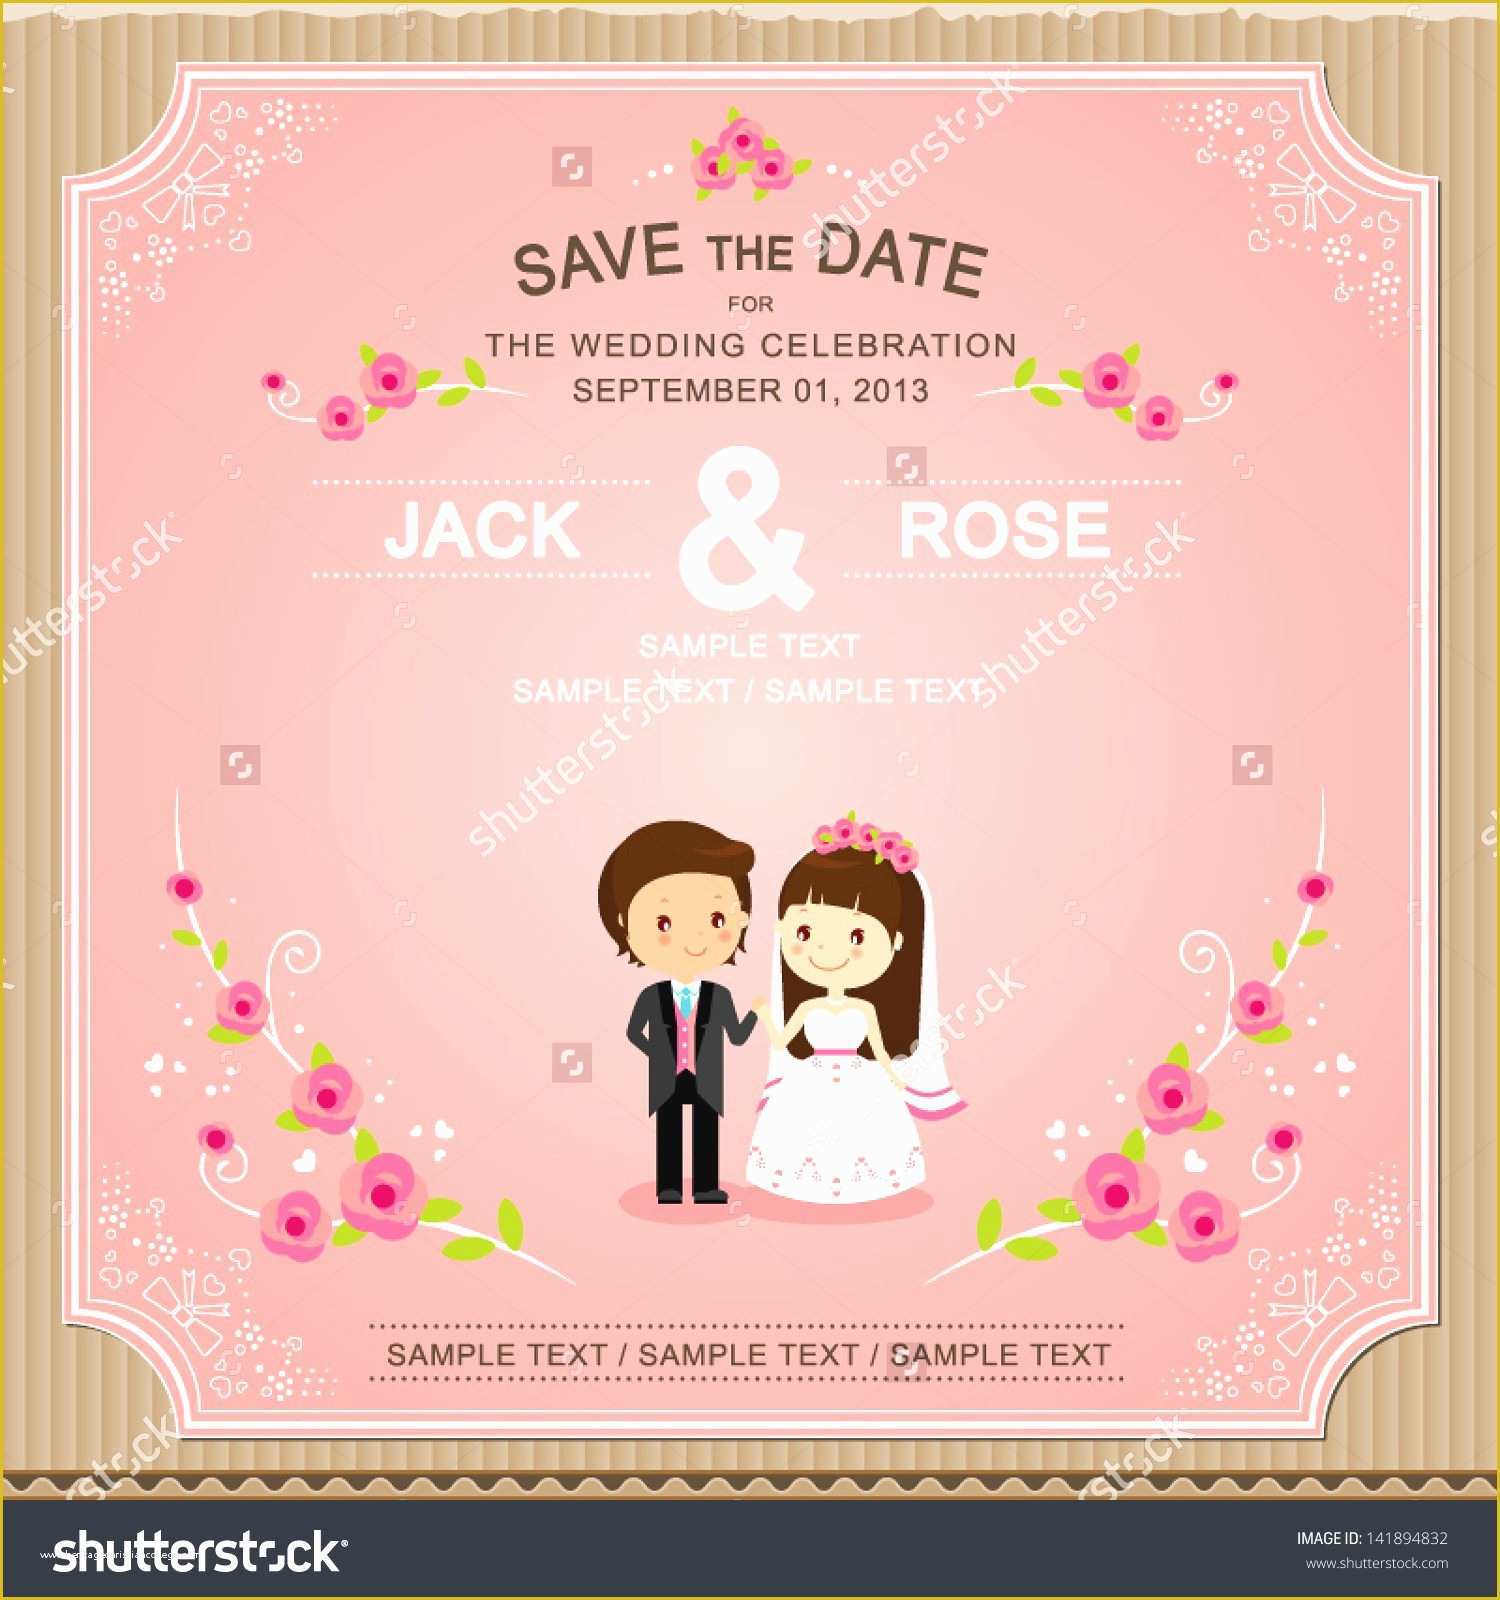 Free Online Wedding Invitation Templates Of Line Wedding Invitation Templates Free Download Best